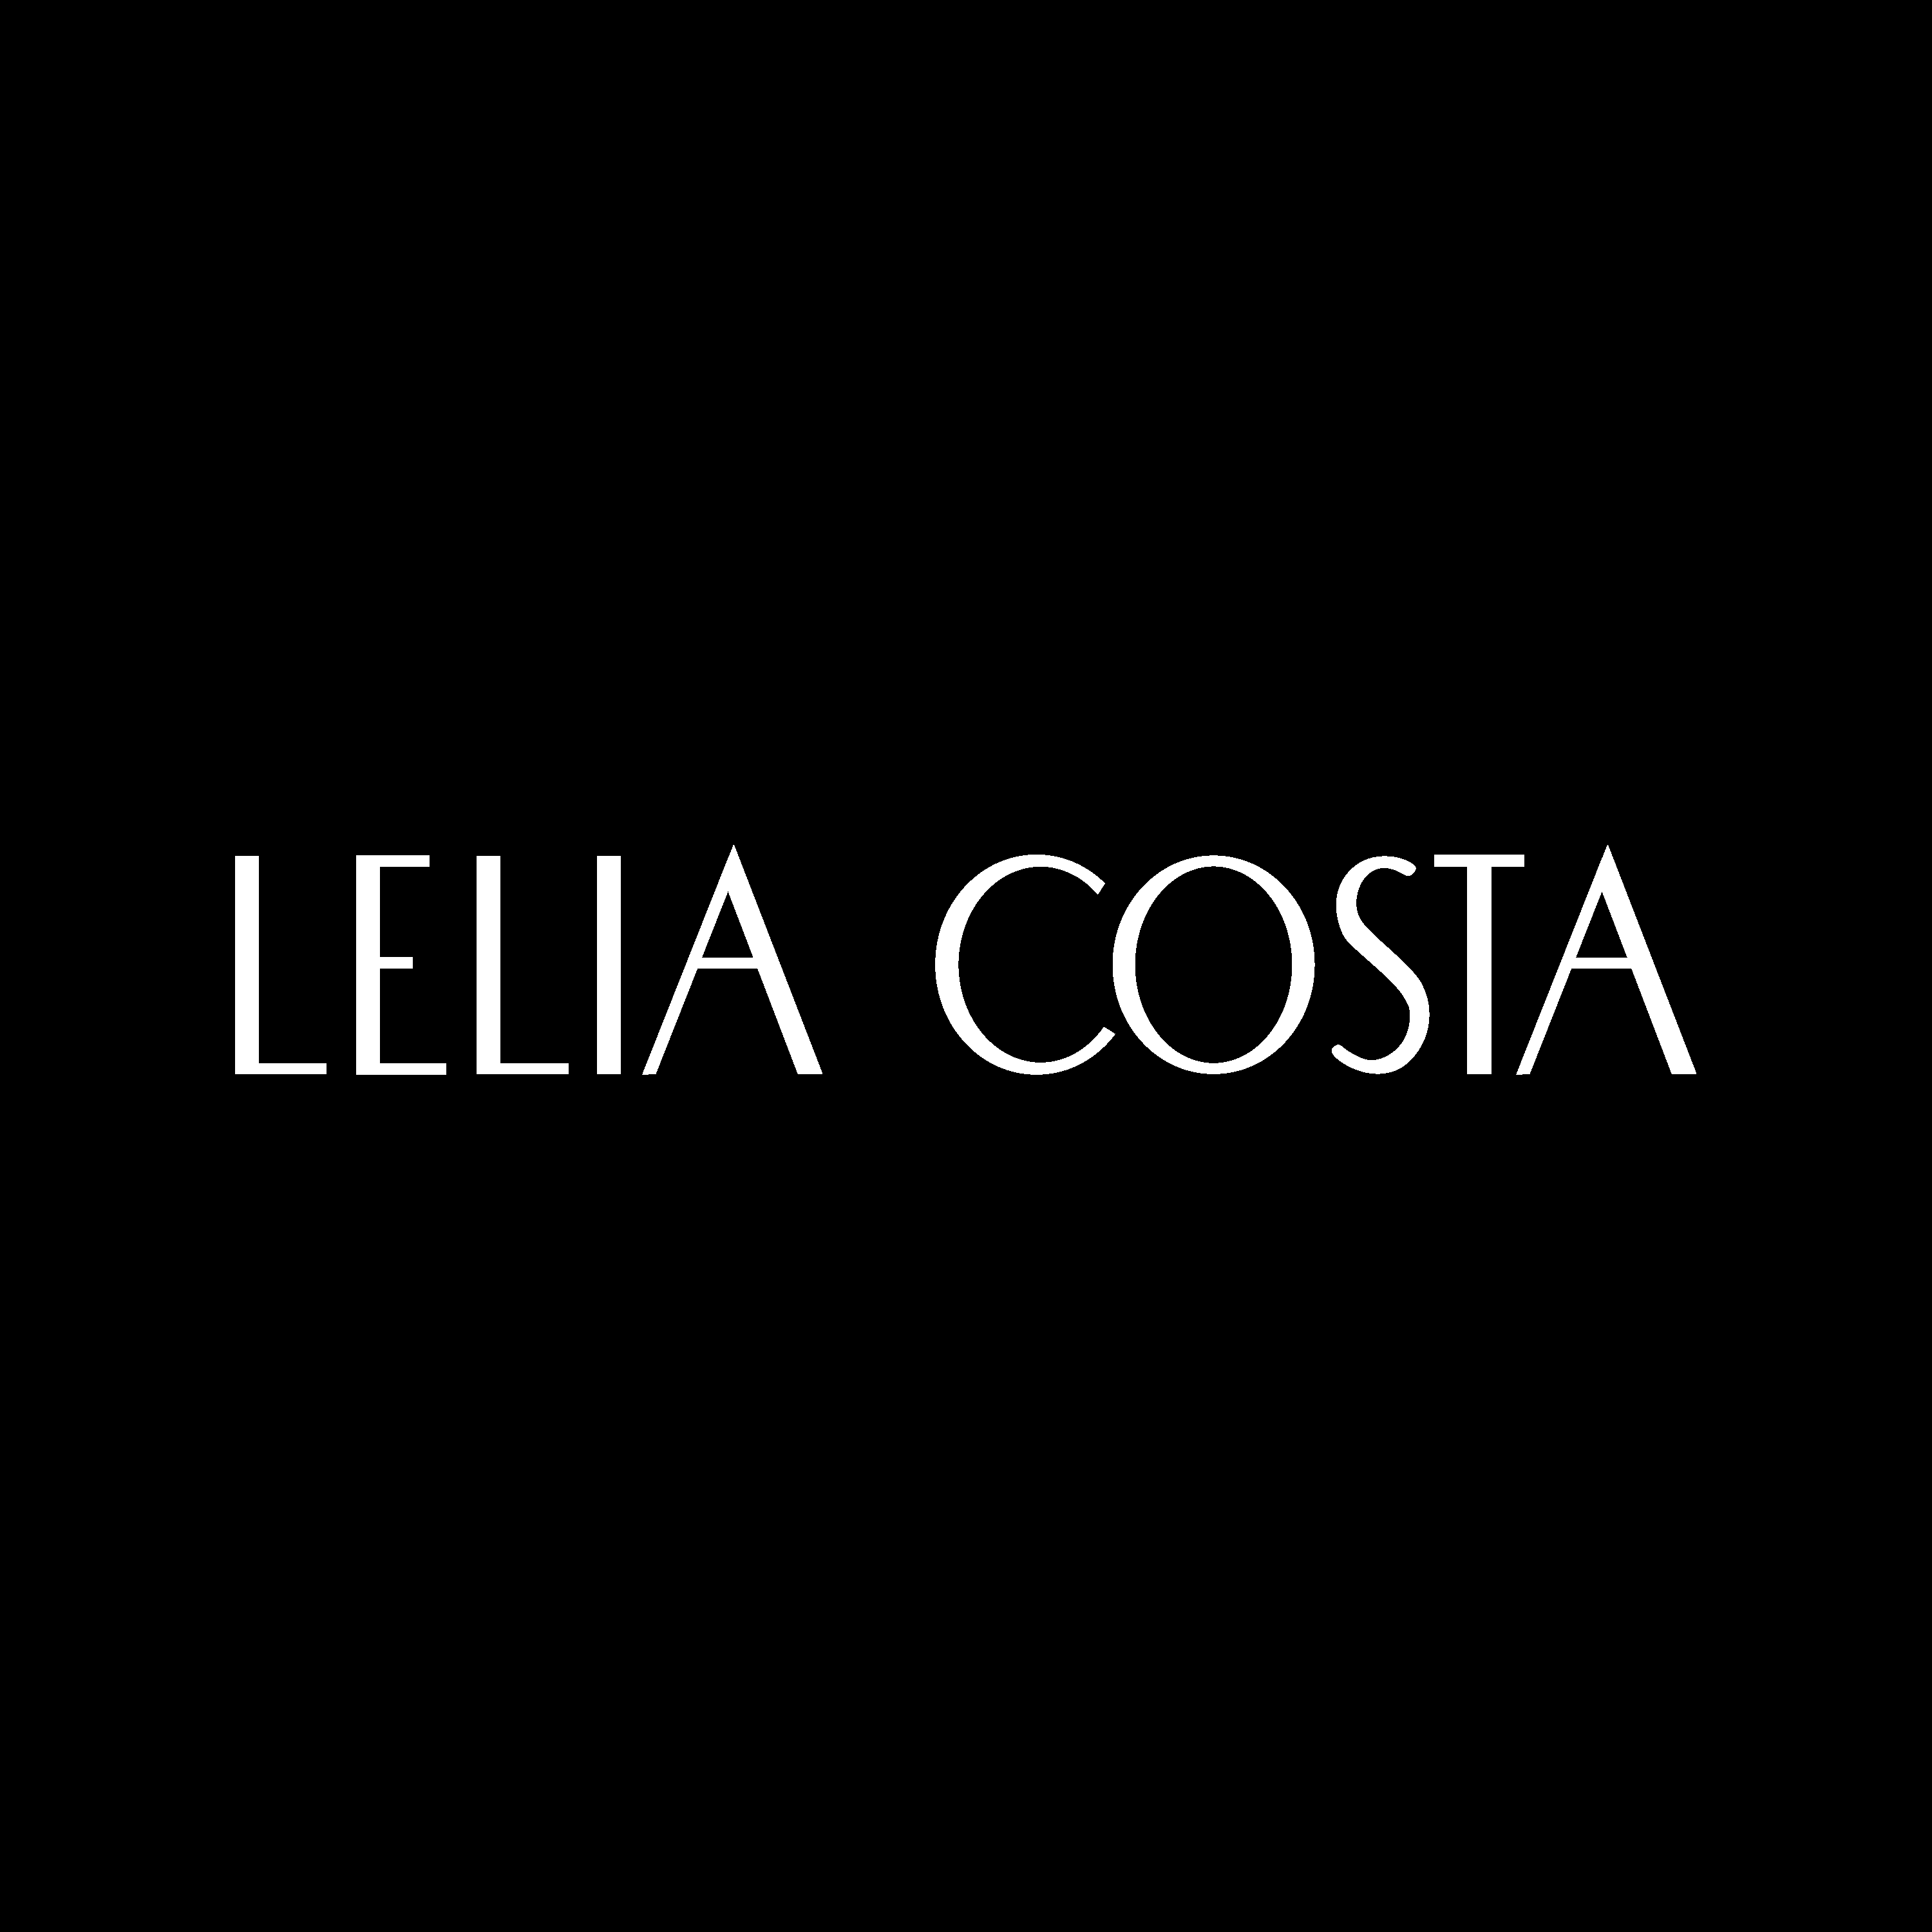 Lelia Costa